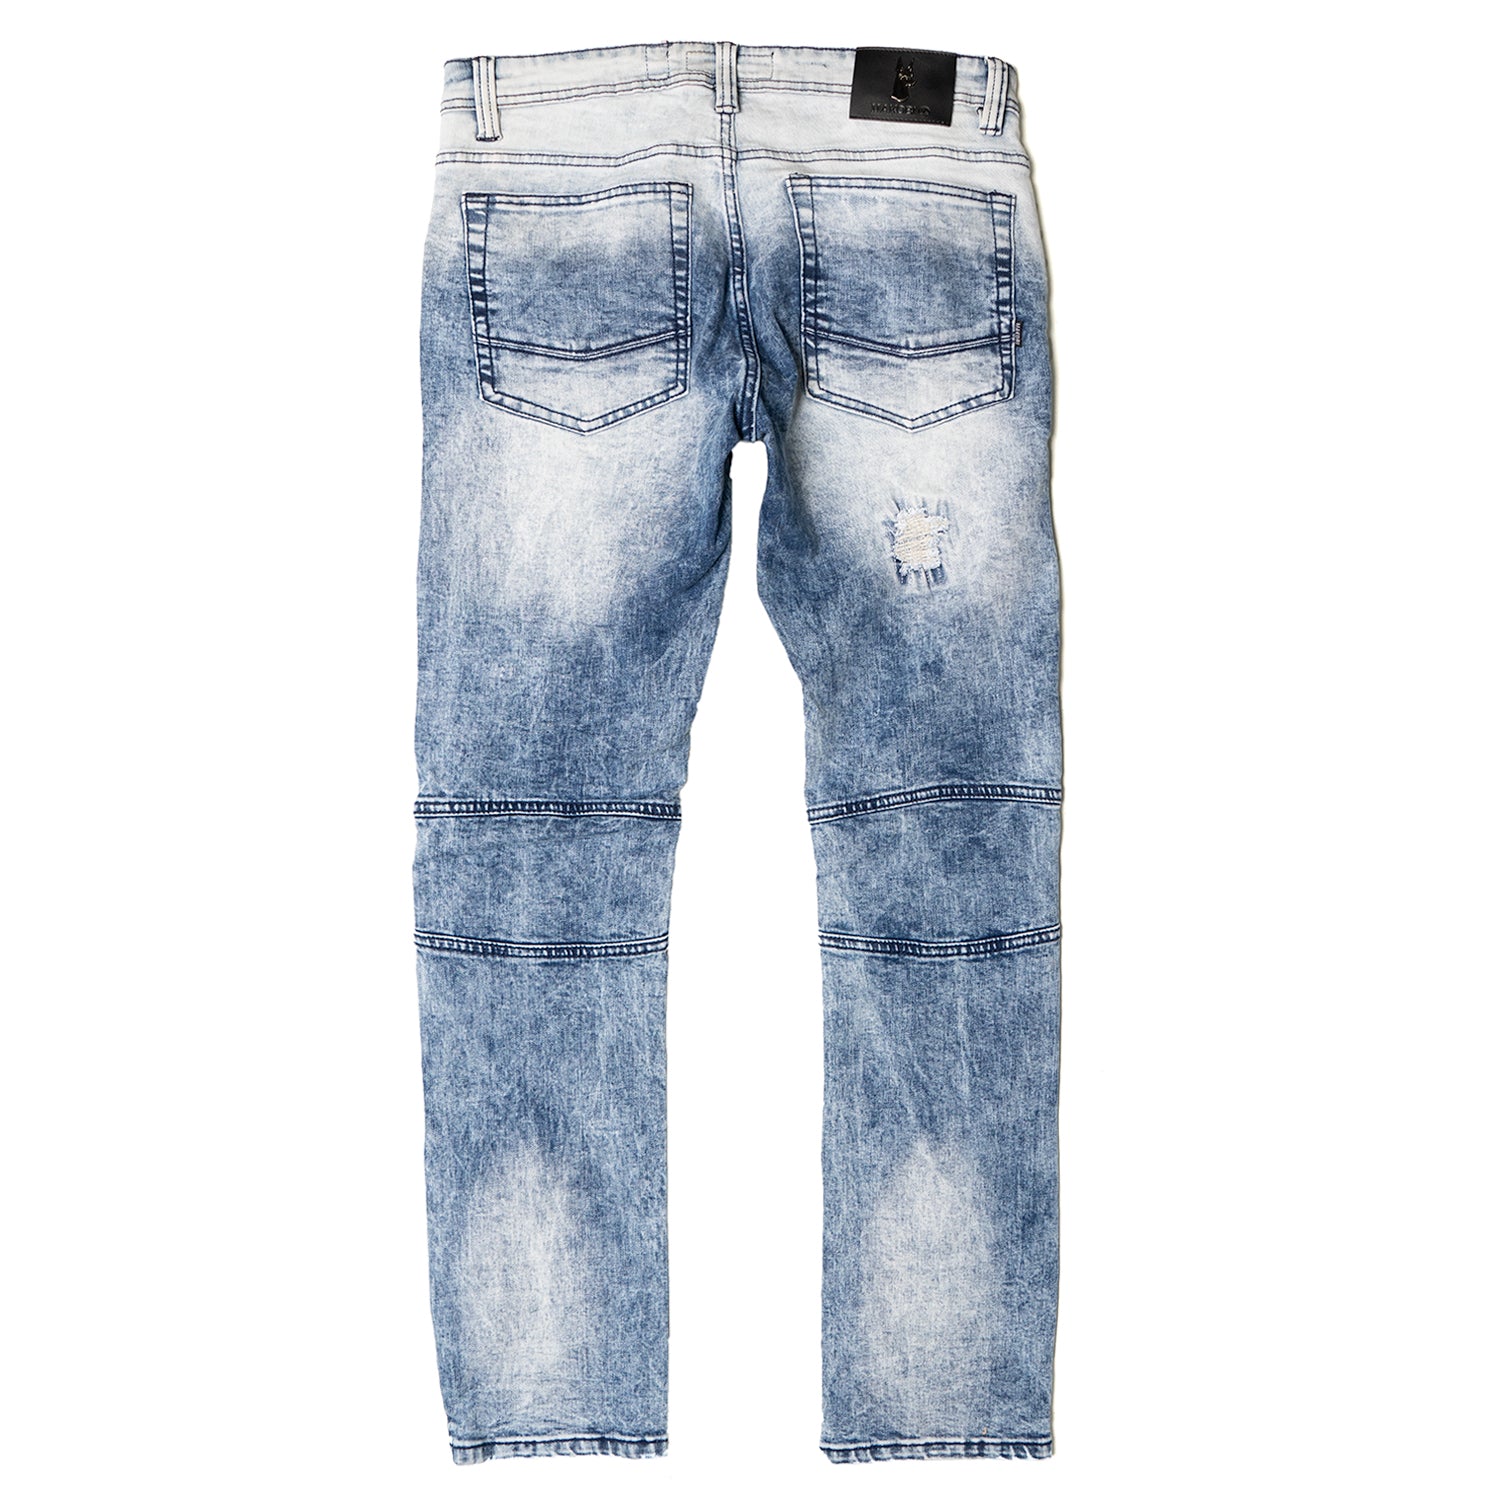 M1786 Makobi Prado Biker Jeans pẹlu Rip & Tunṣe - Dark Wẹ